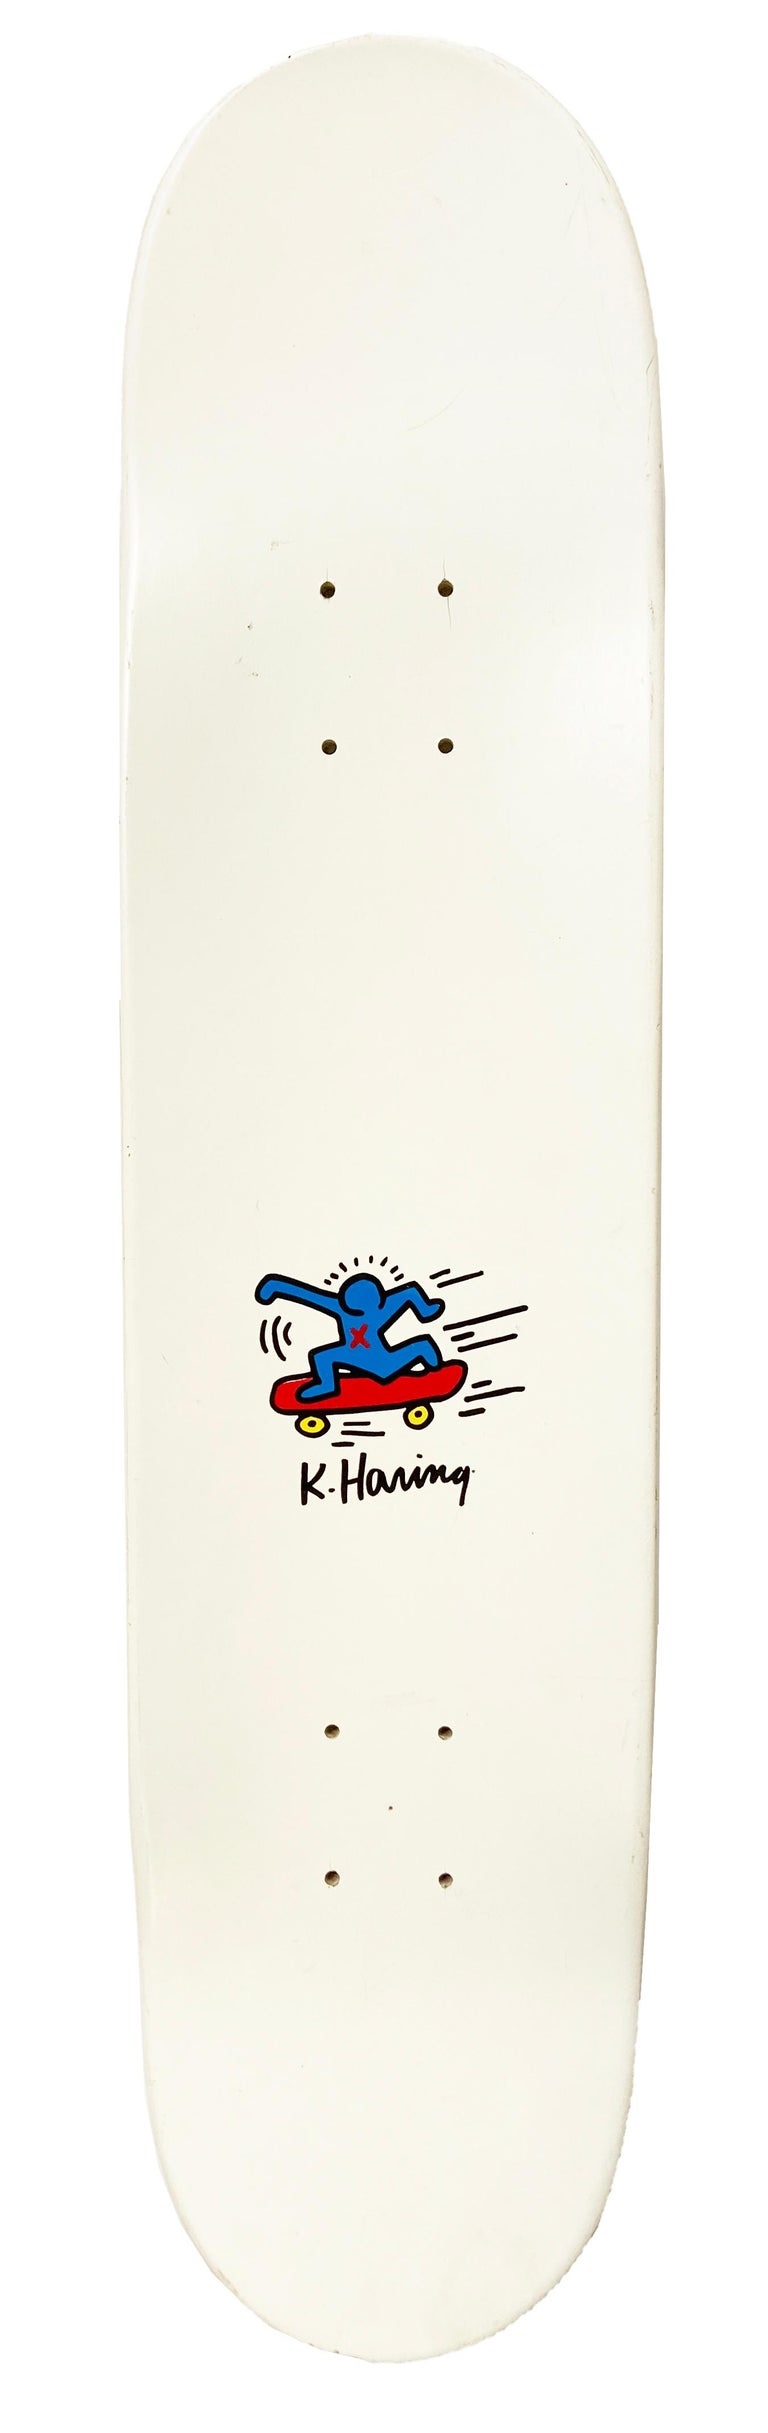 Vintage Keith Haring Skateboard Deck (Keith Haring Pop Shop) For Sale 1